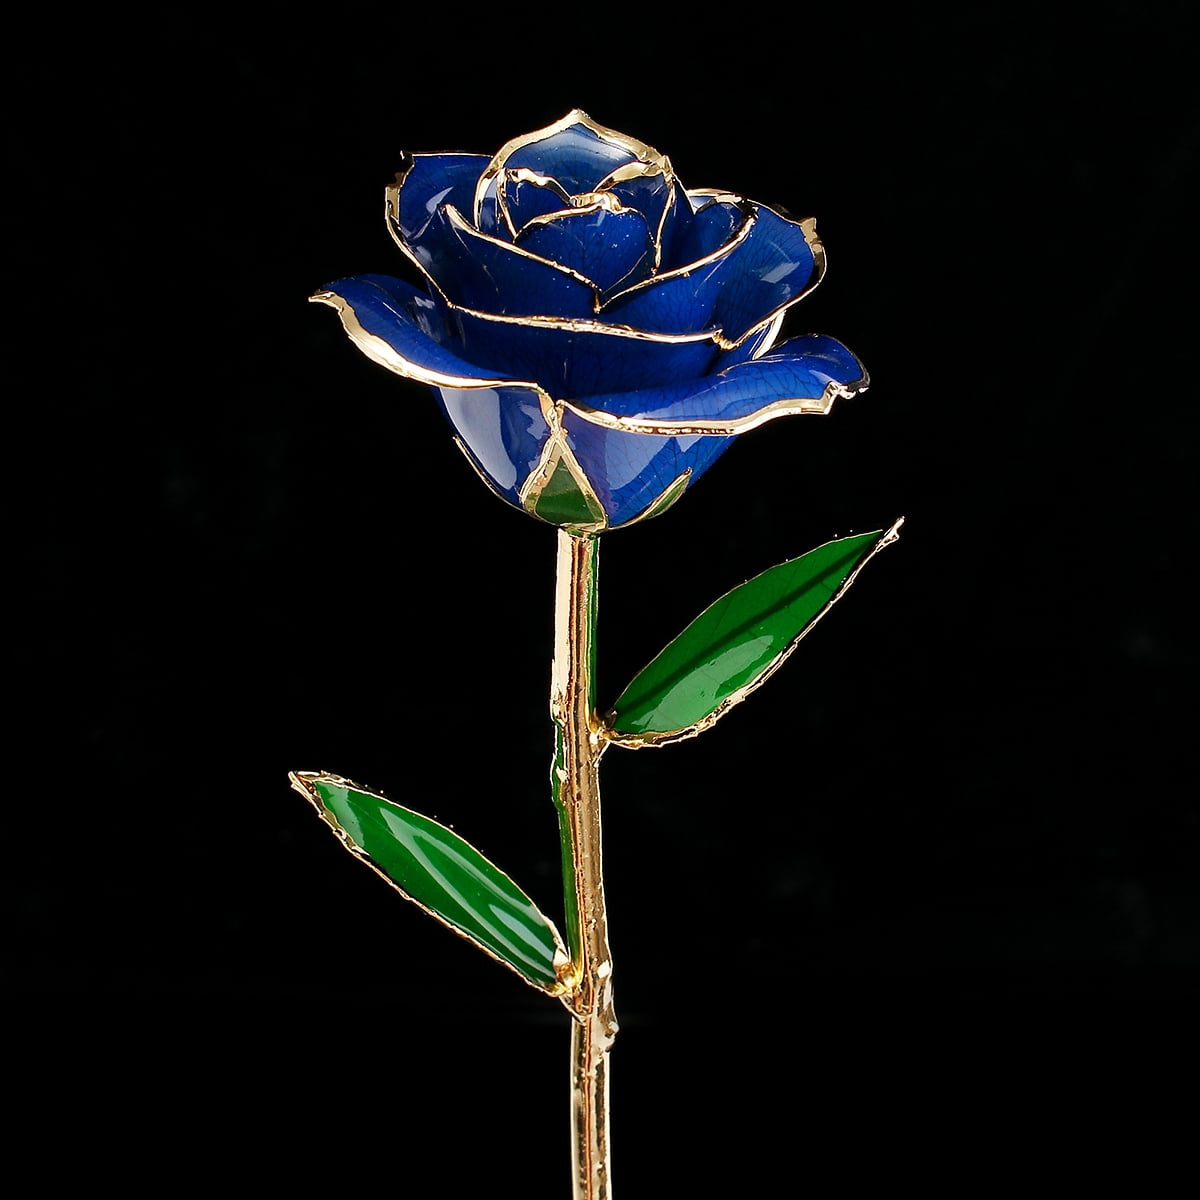 Details about   Gold Rose Flower Long Stem Golden Dipped Flower Valentine's-Day O4K1 